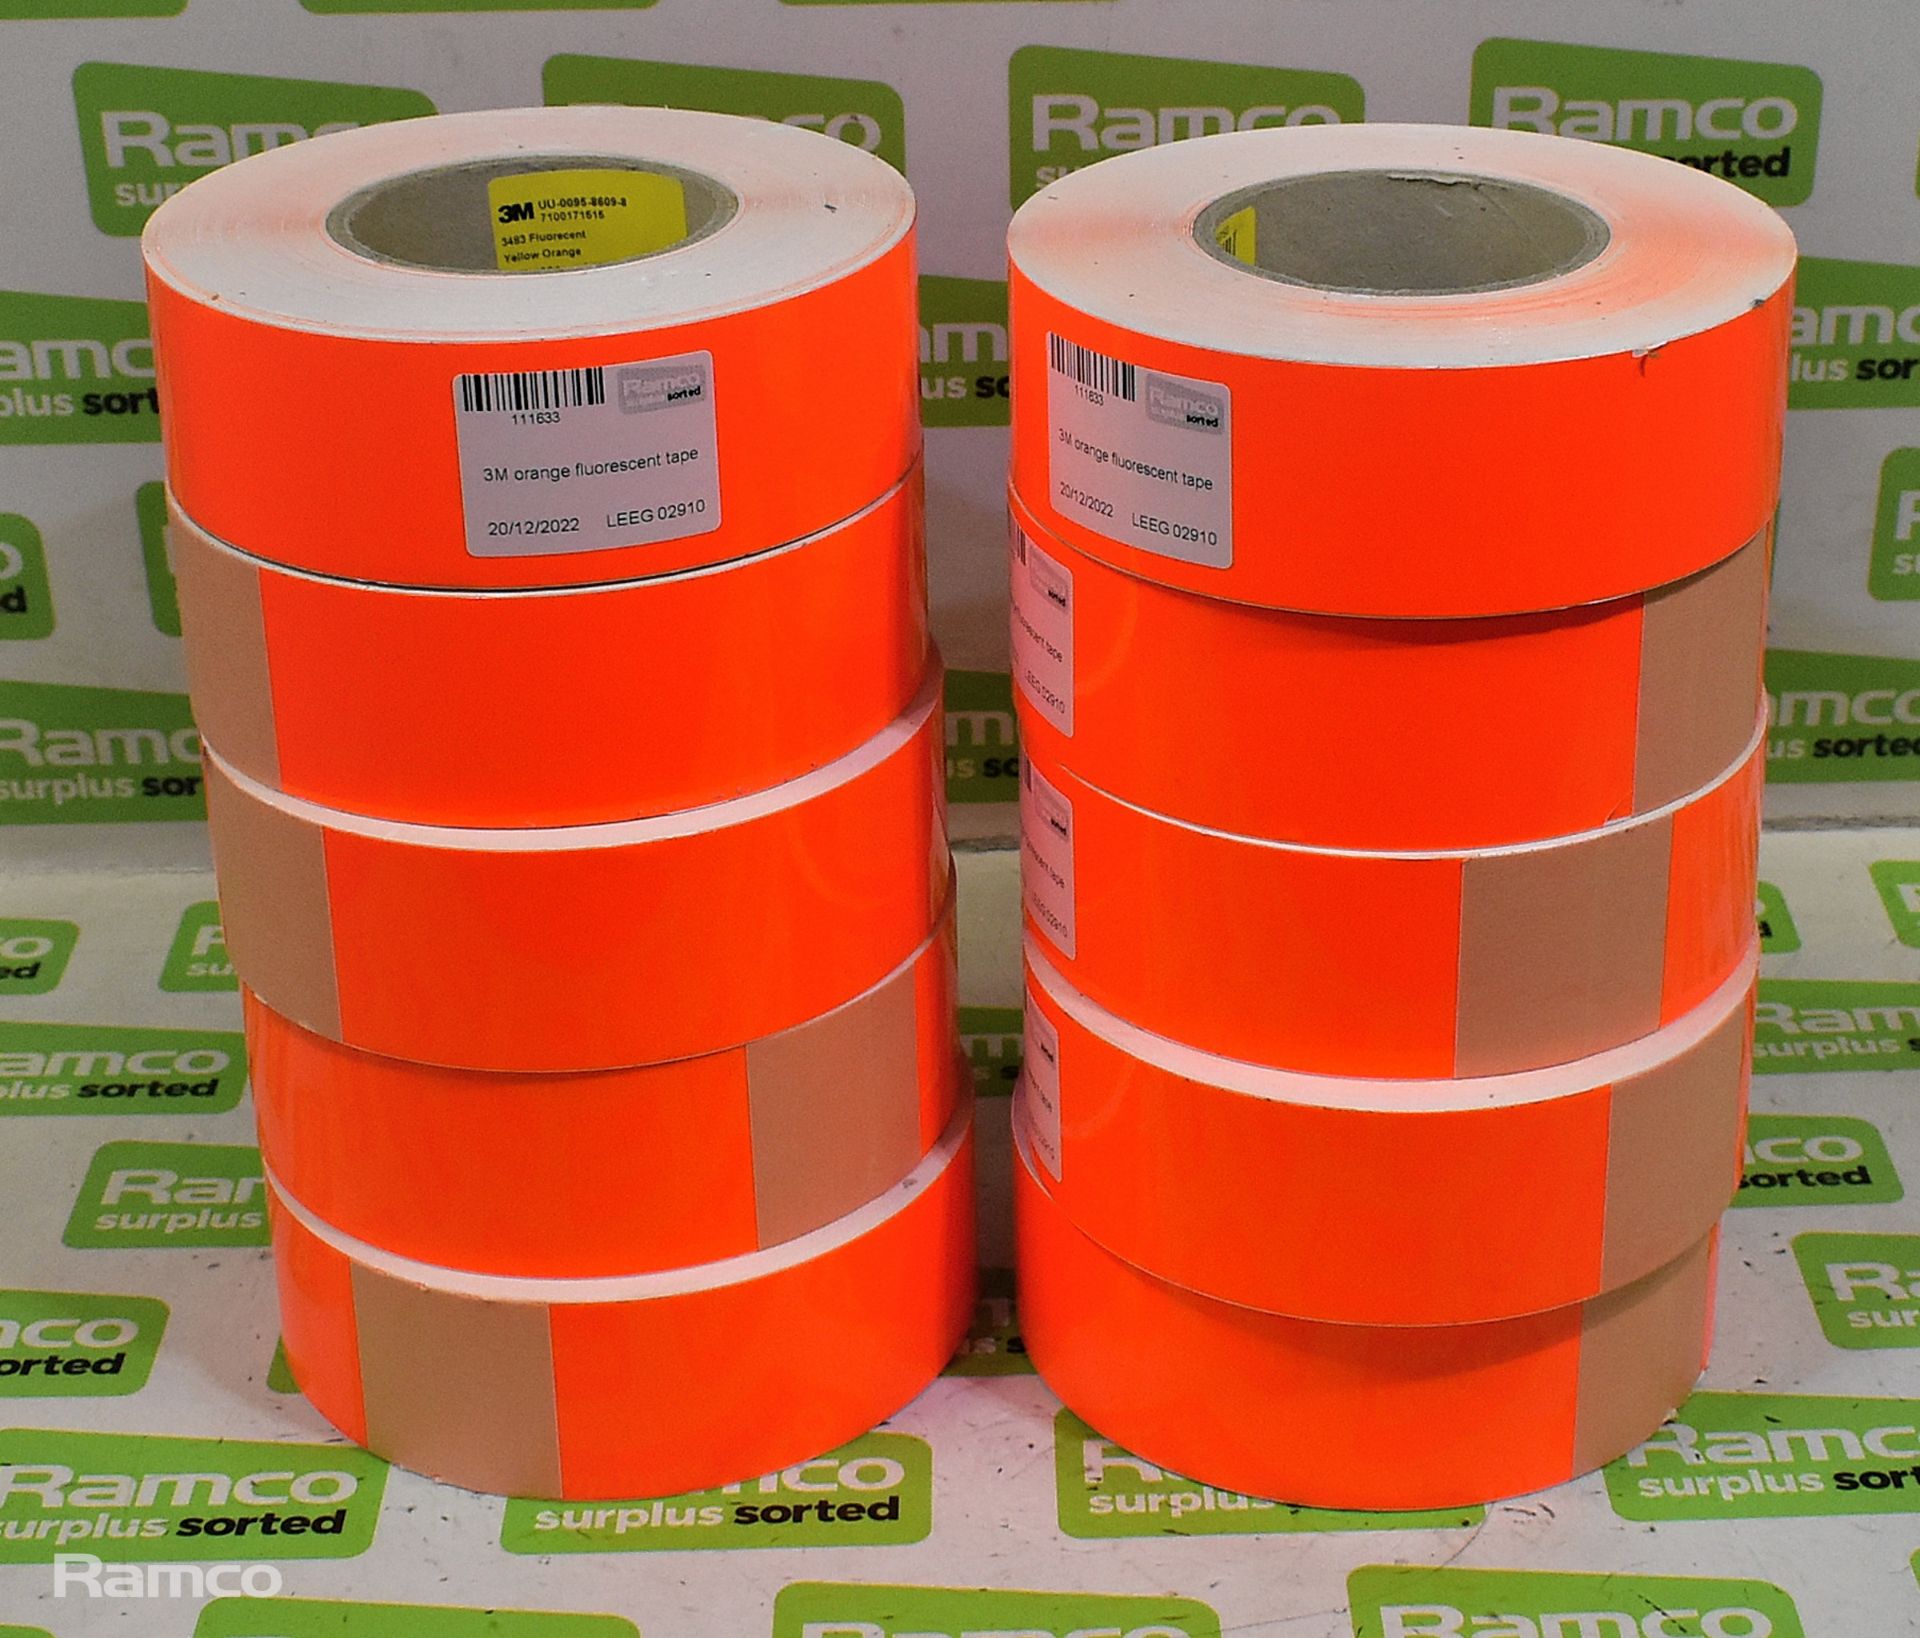 10x rolls of 3M orange fluorescent tape